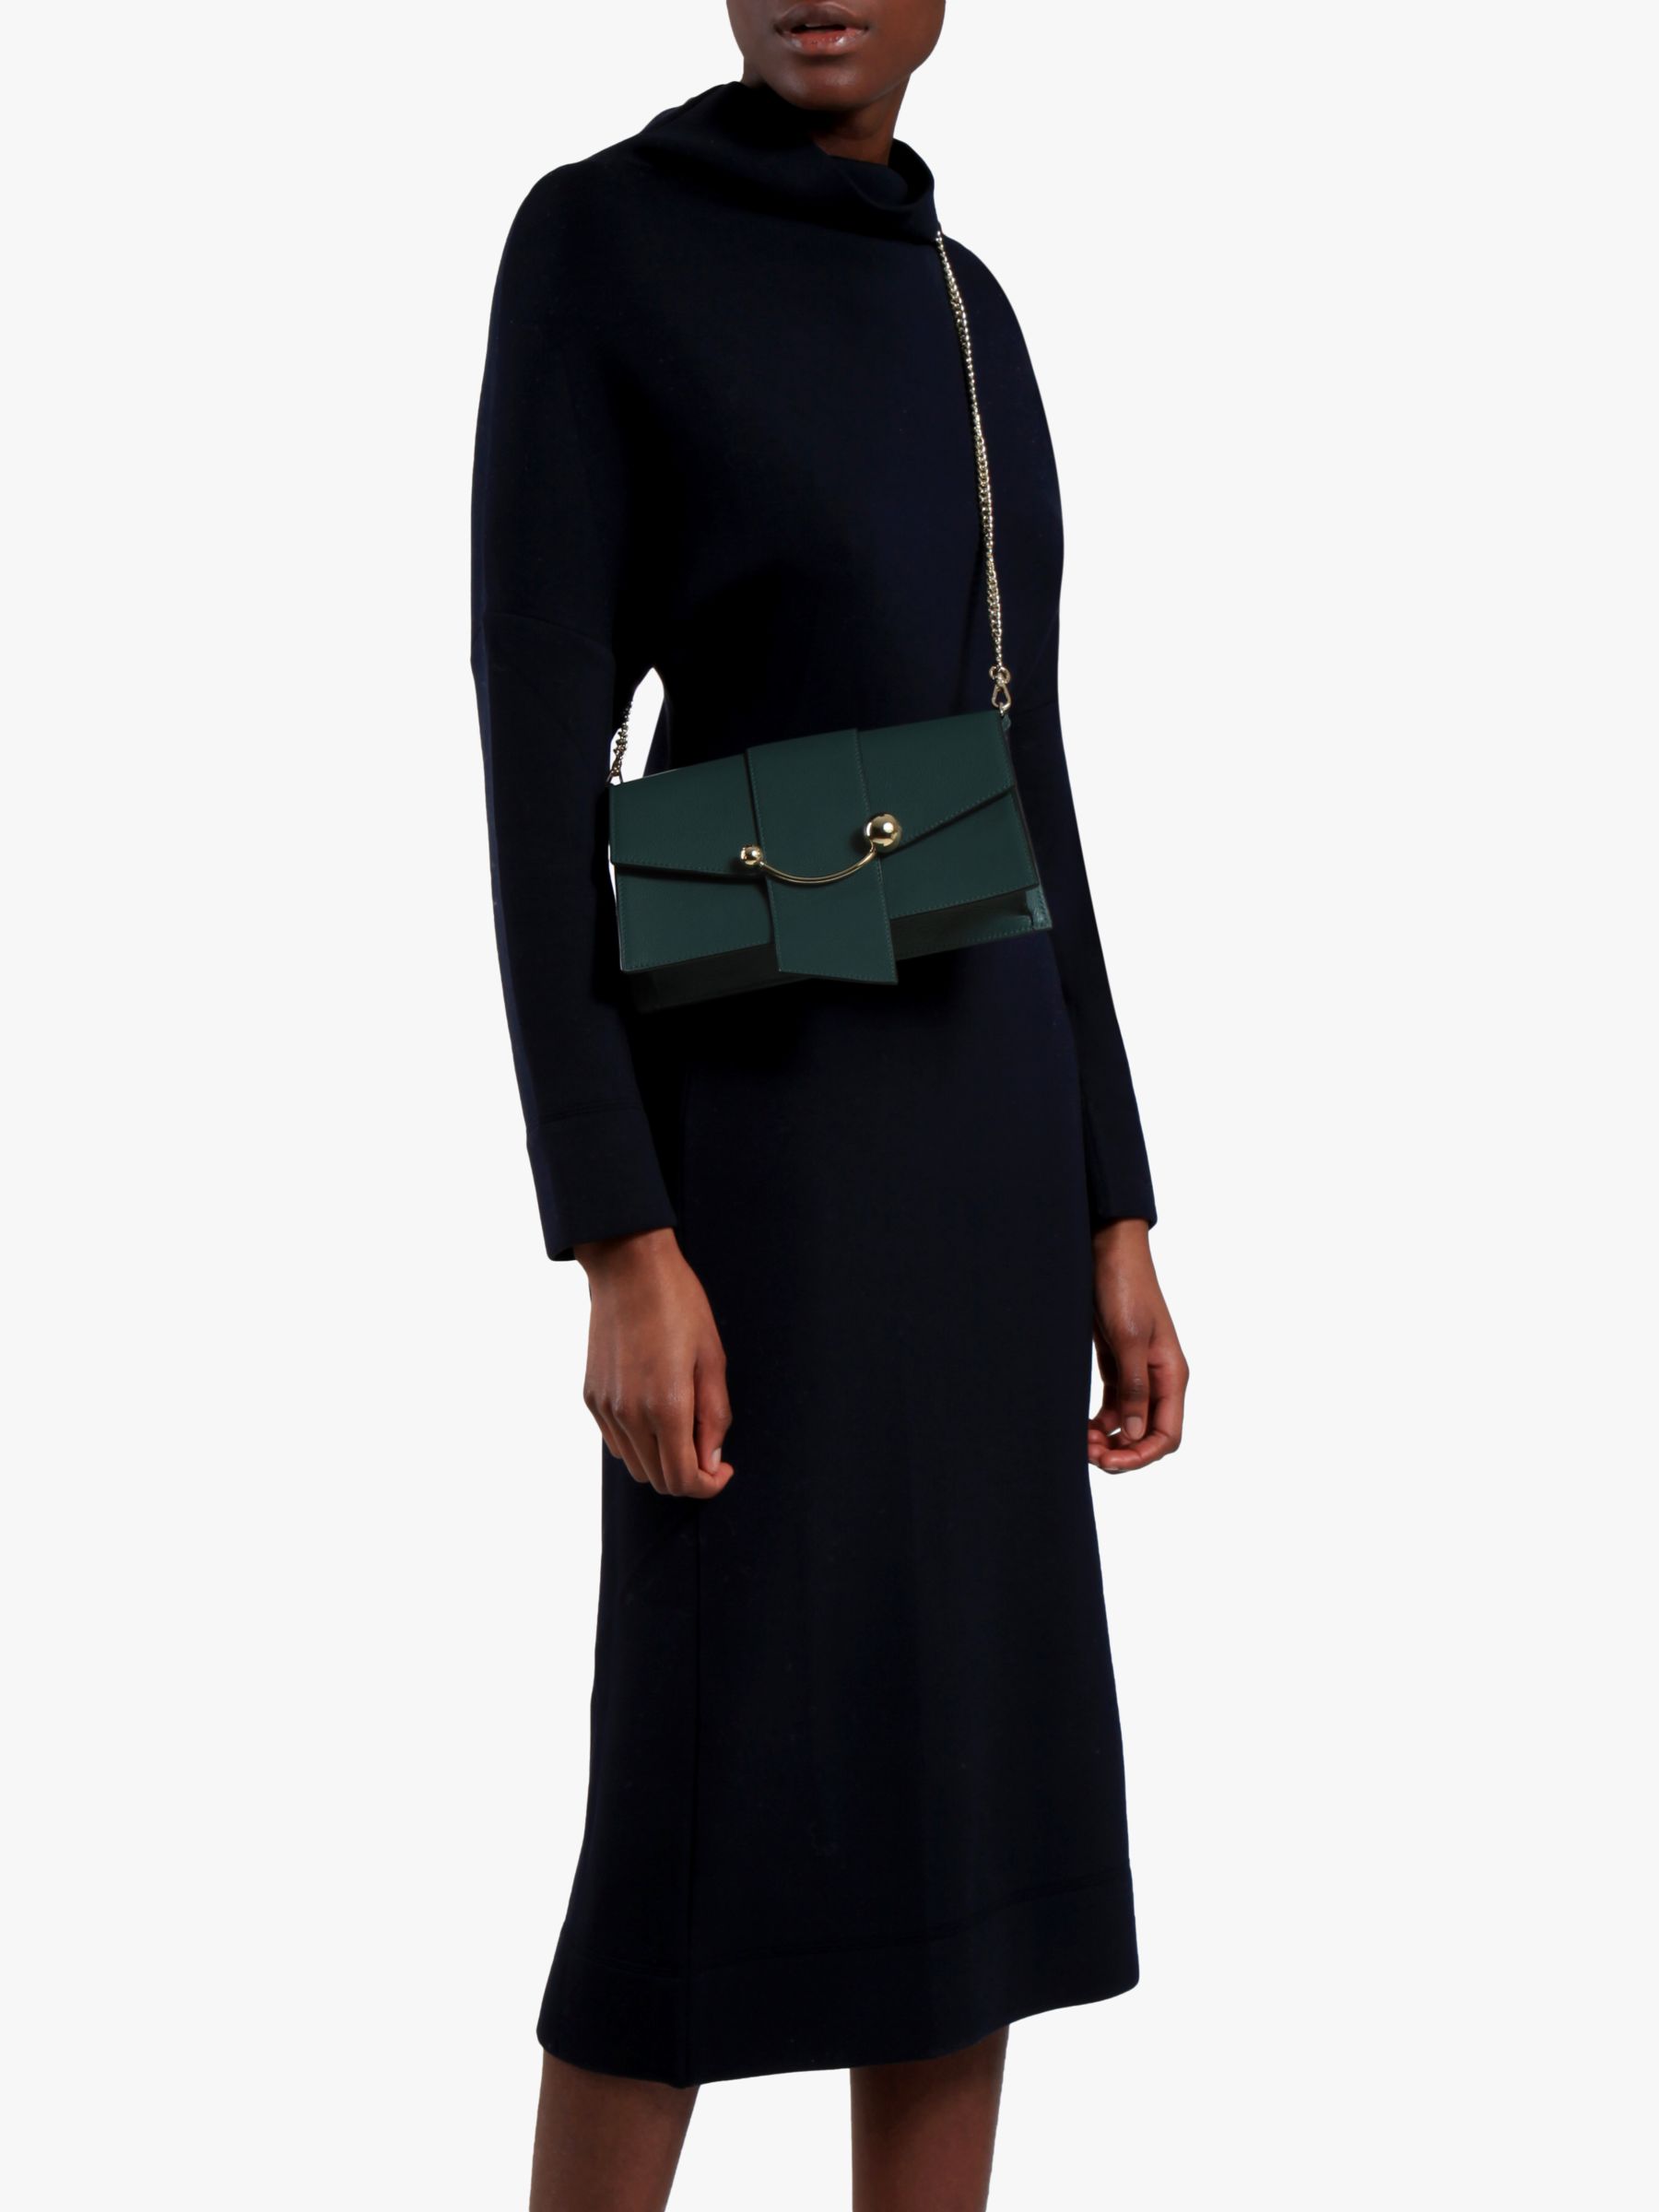 The Strathberry Crescent Shoulder Bag in Bottle Green - Fashion